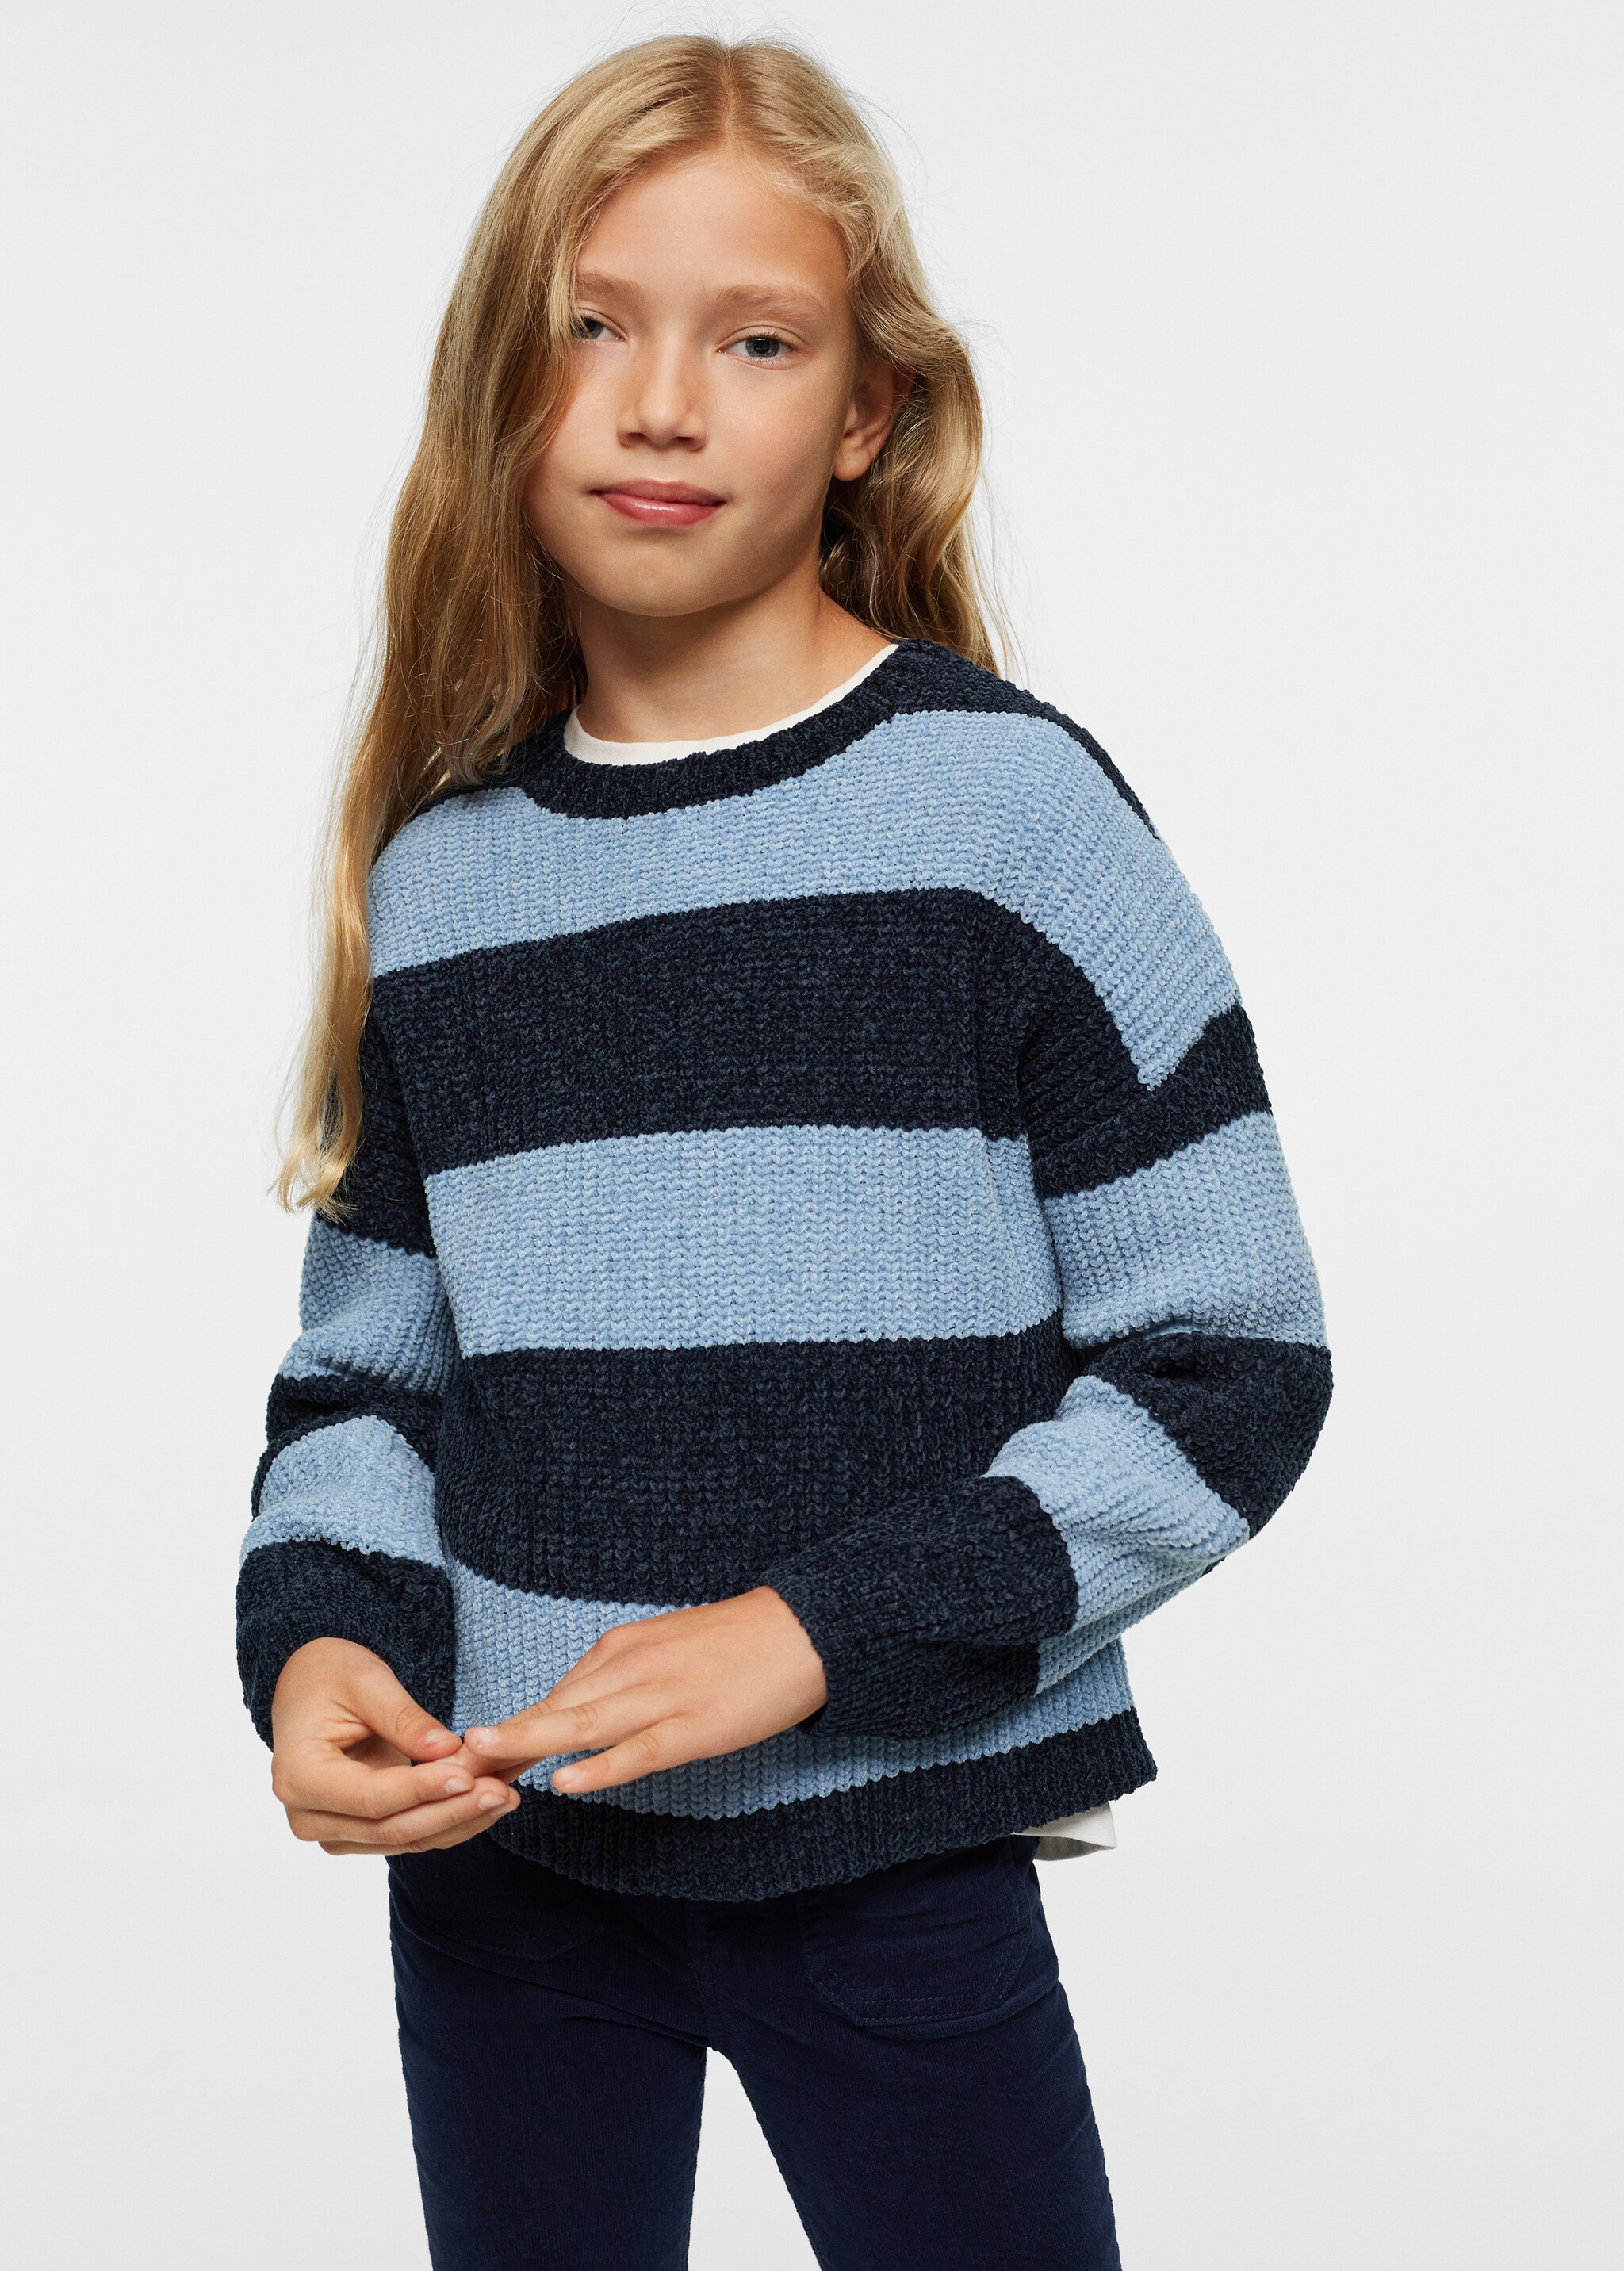 Striped chenille sweater - Medium plane